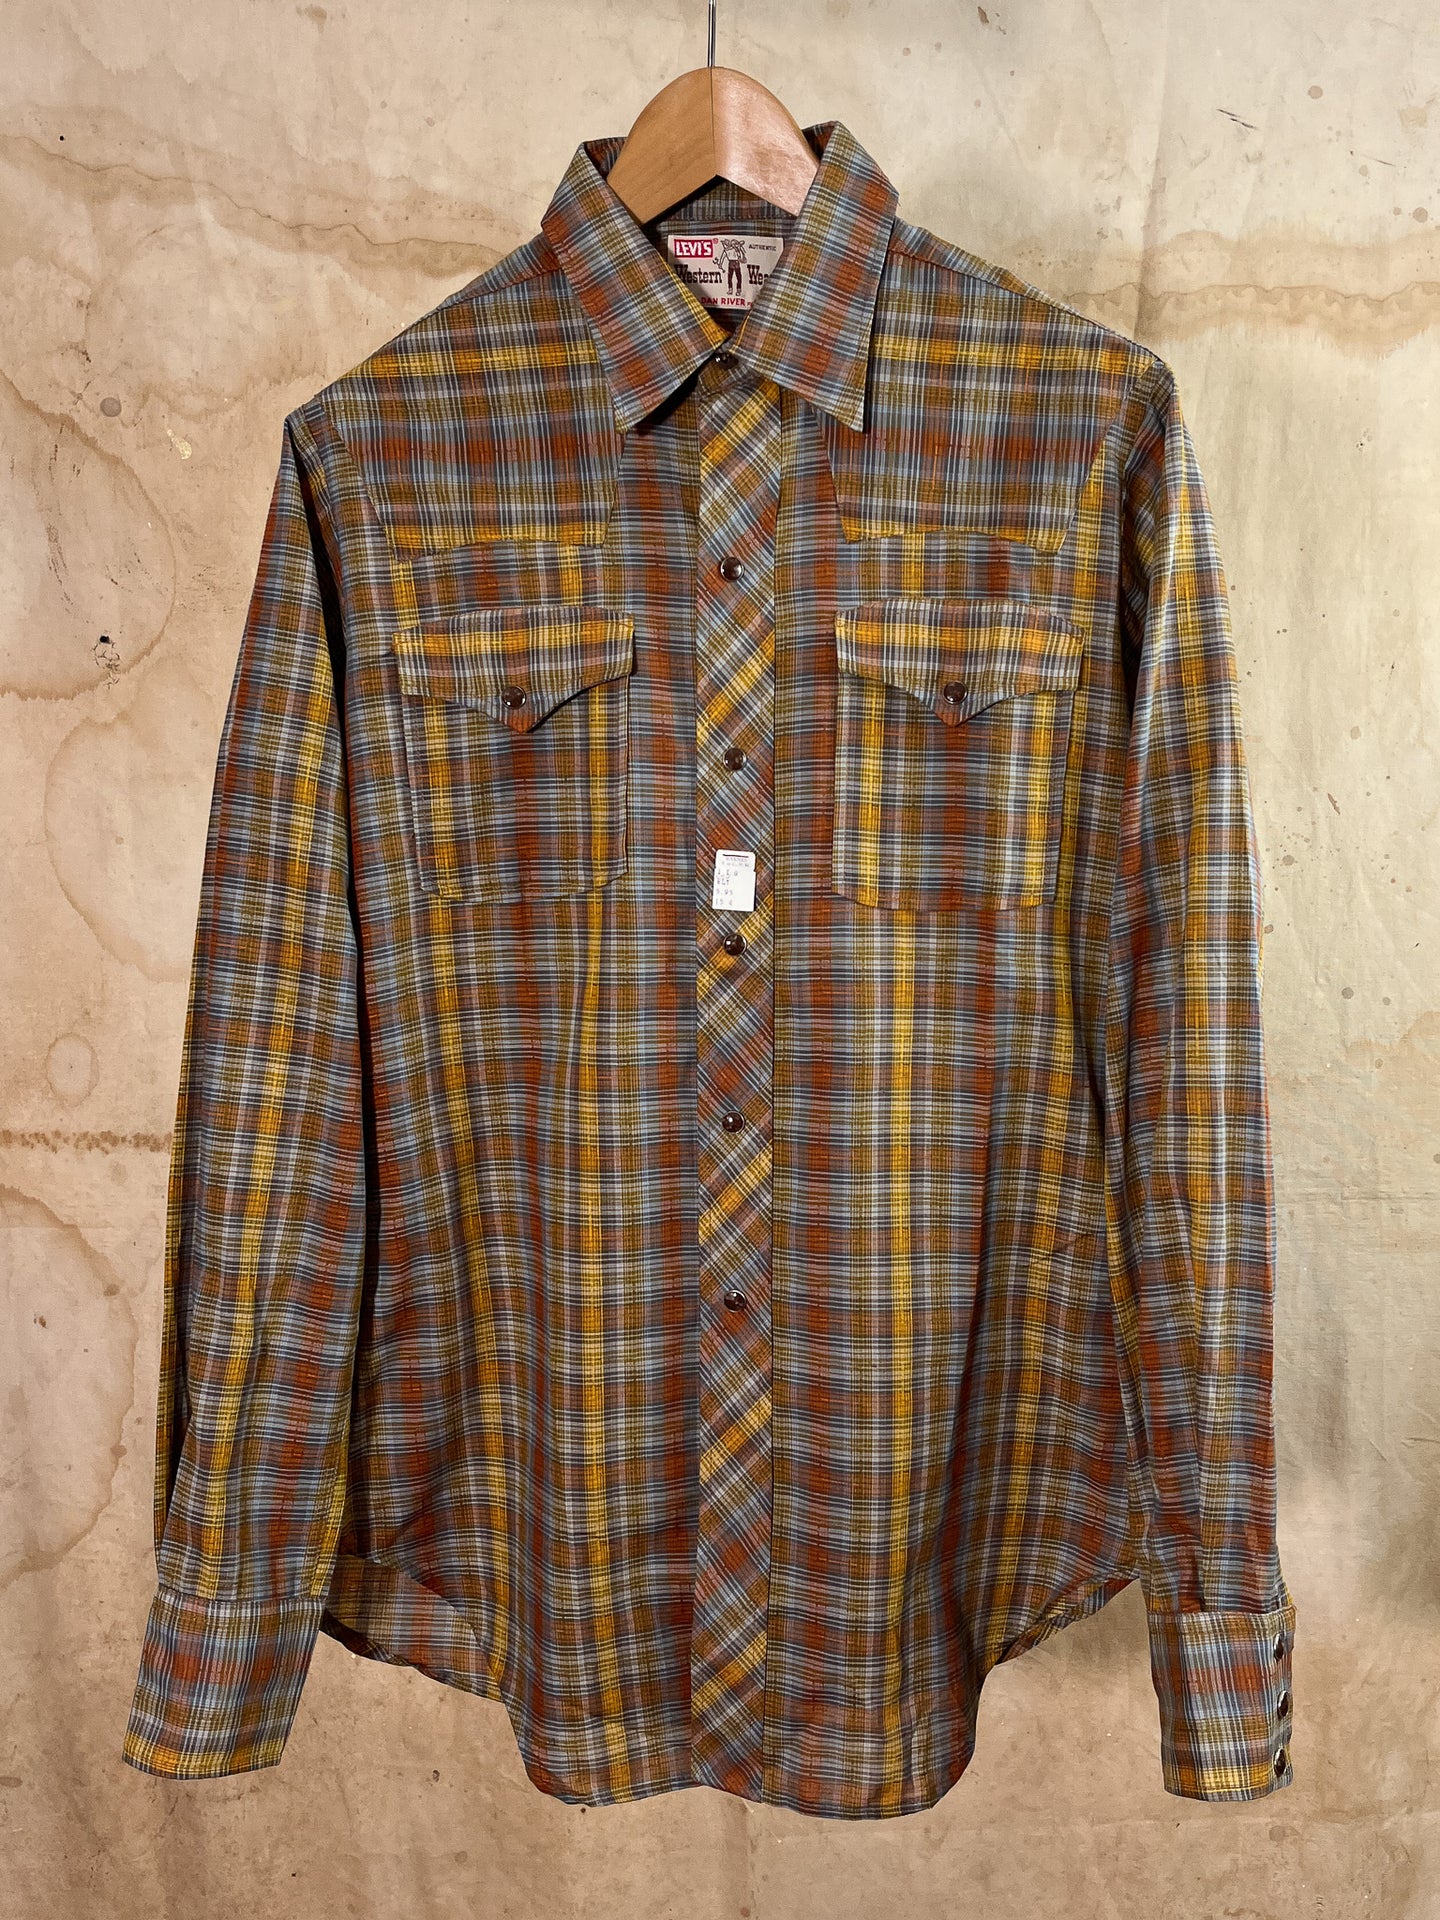 Levi's Western Wear - Cotton Plaid Pearl Snap Shirt - Deadstock c. 1960s-70s